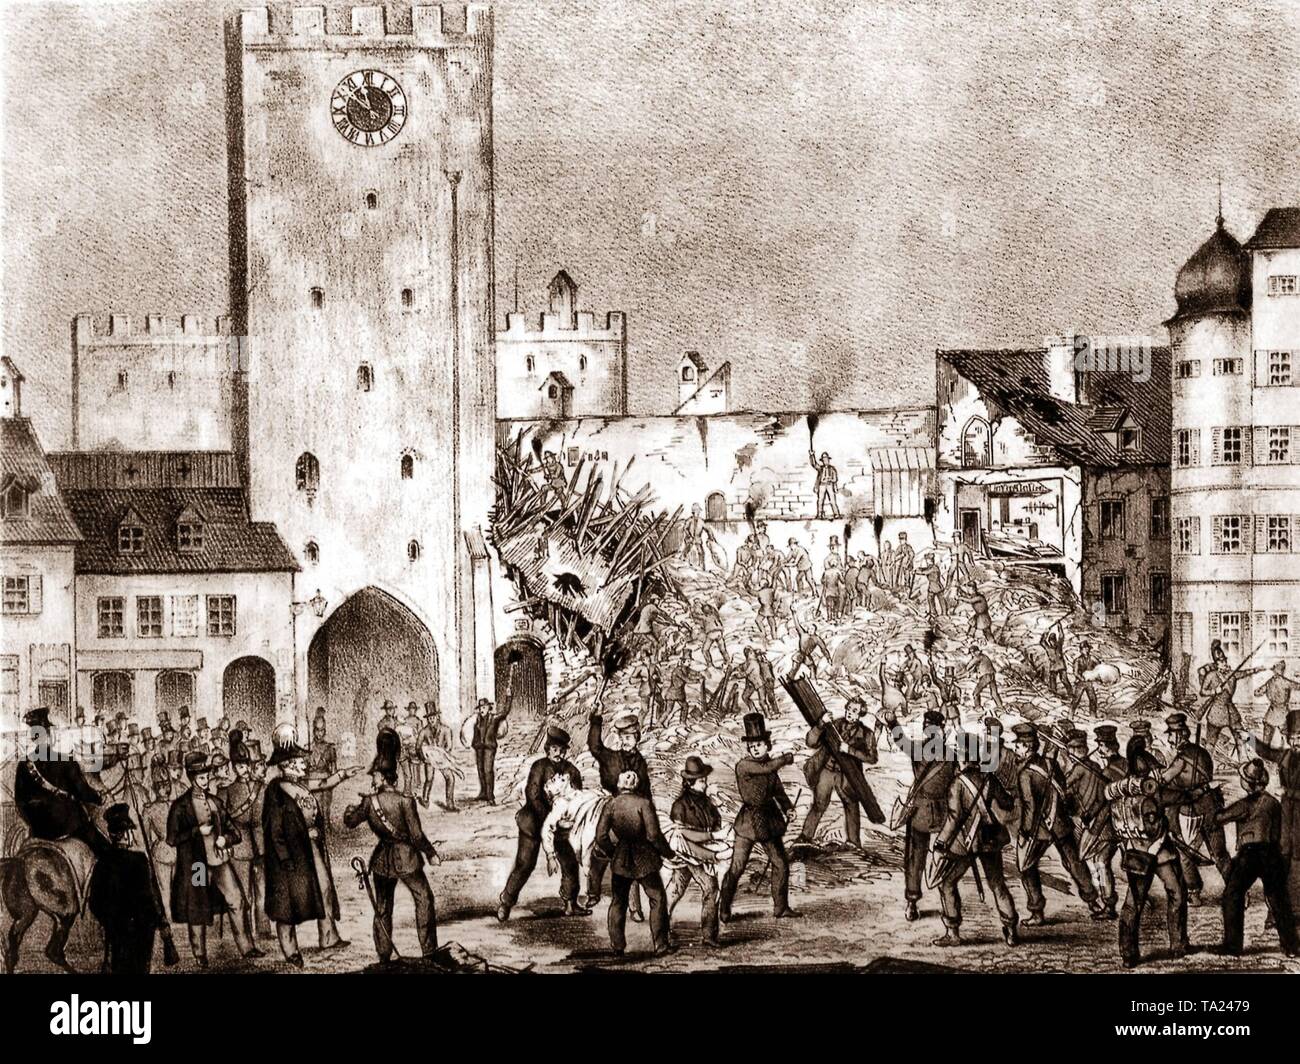 The gunpowder explosion at Karlstor in Munich in 1857. Stock Photo